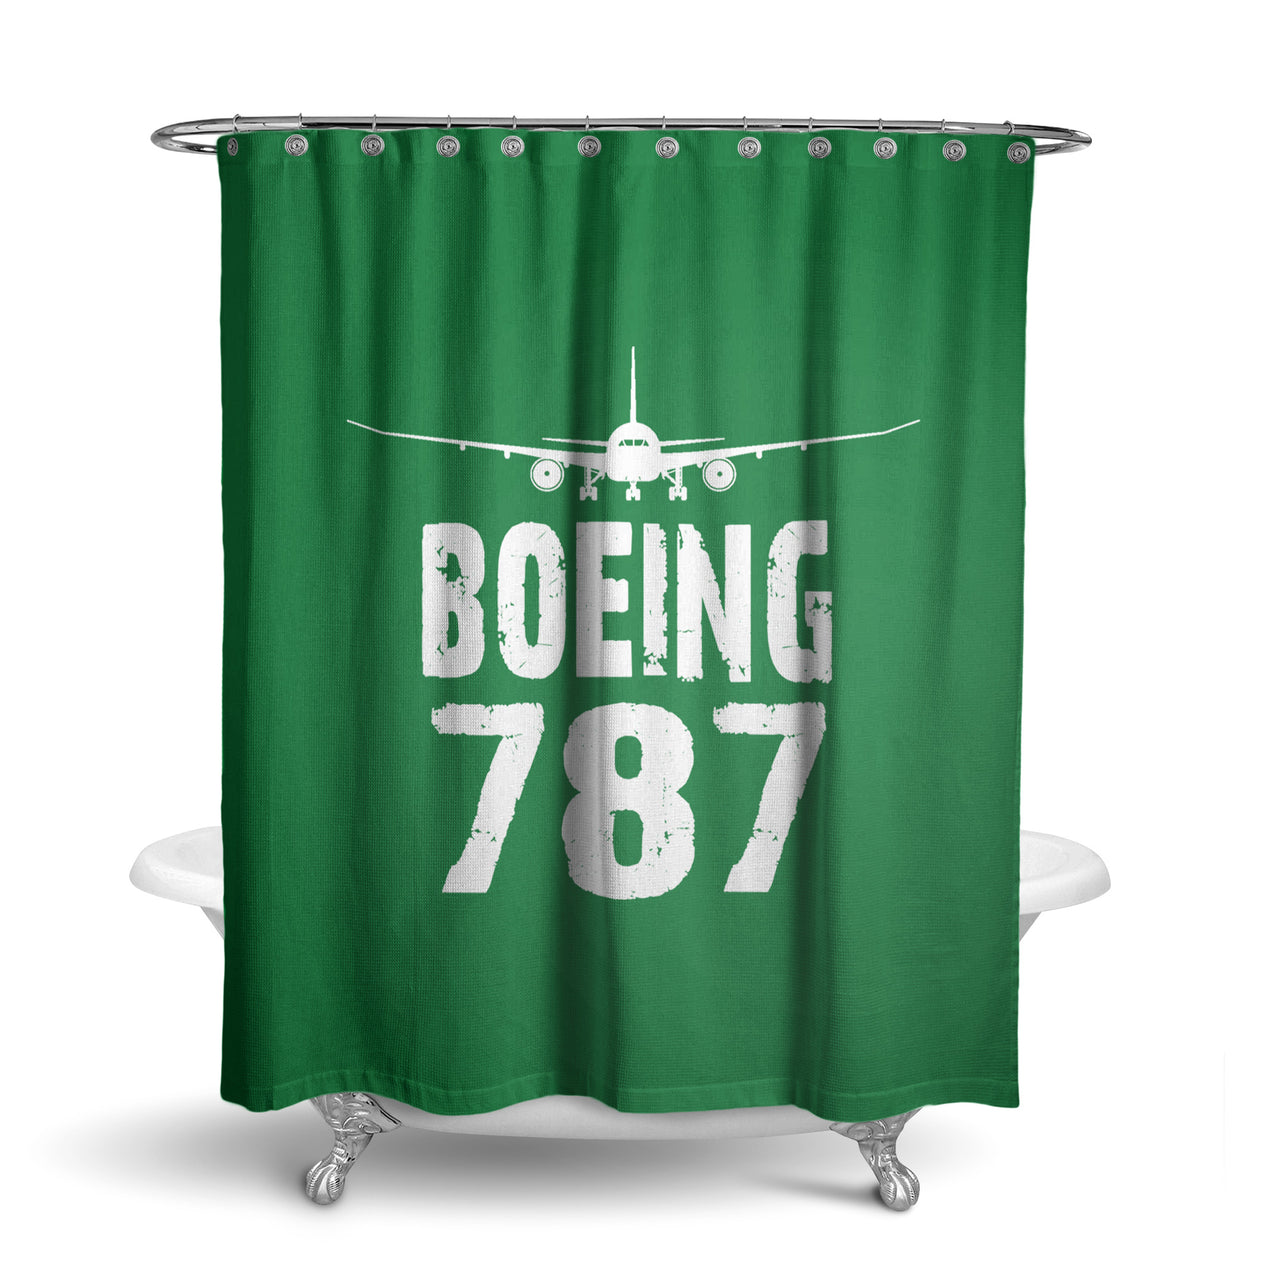 Boeing 787 & Plane Designed Shower Curtains